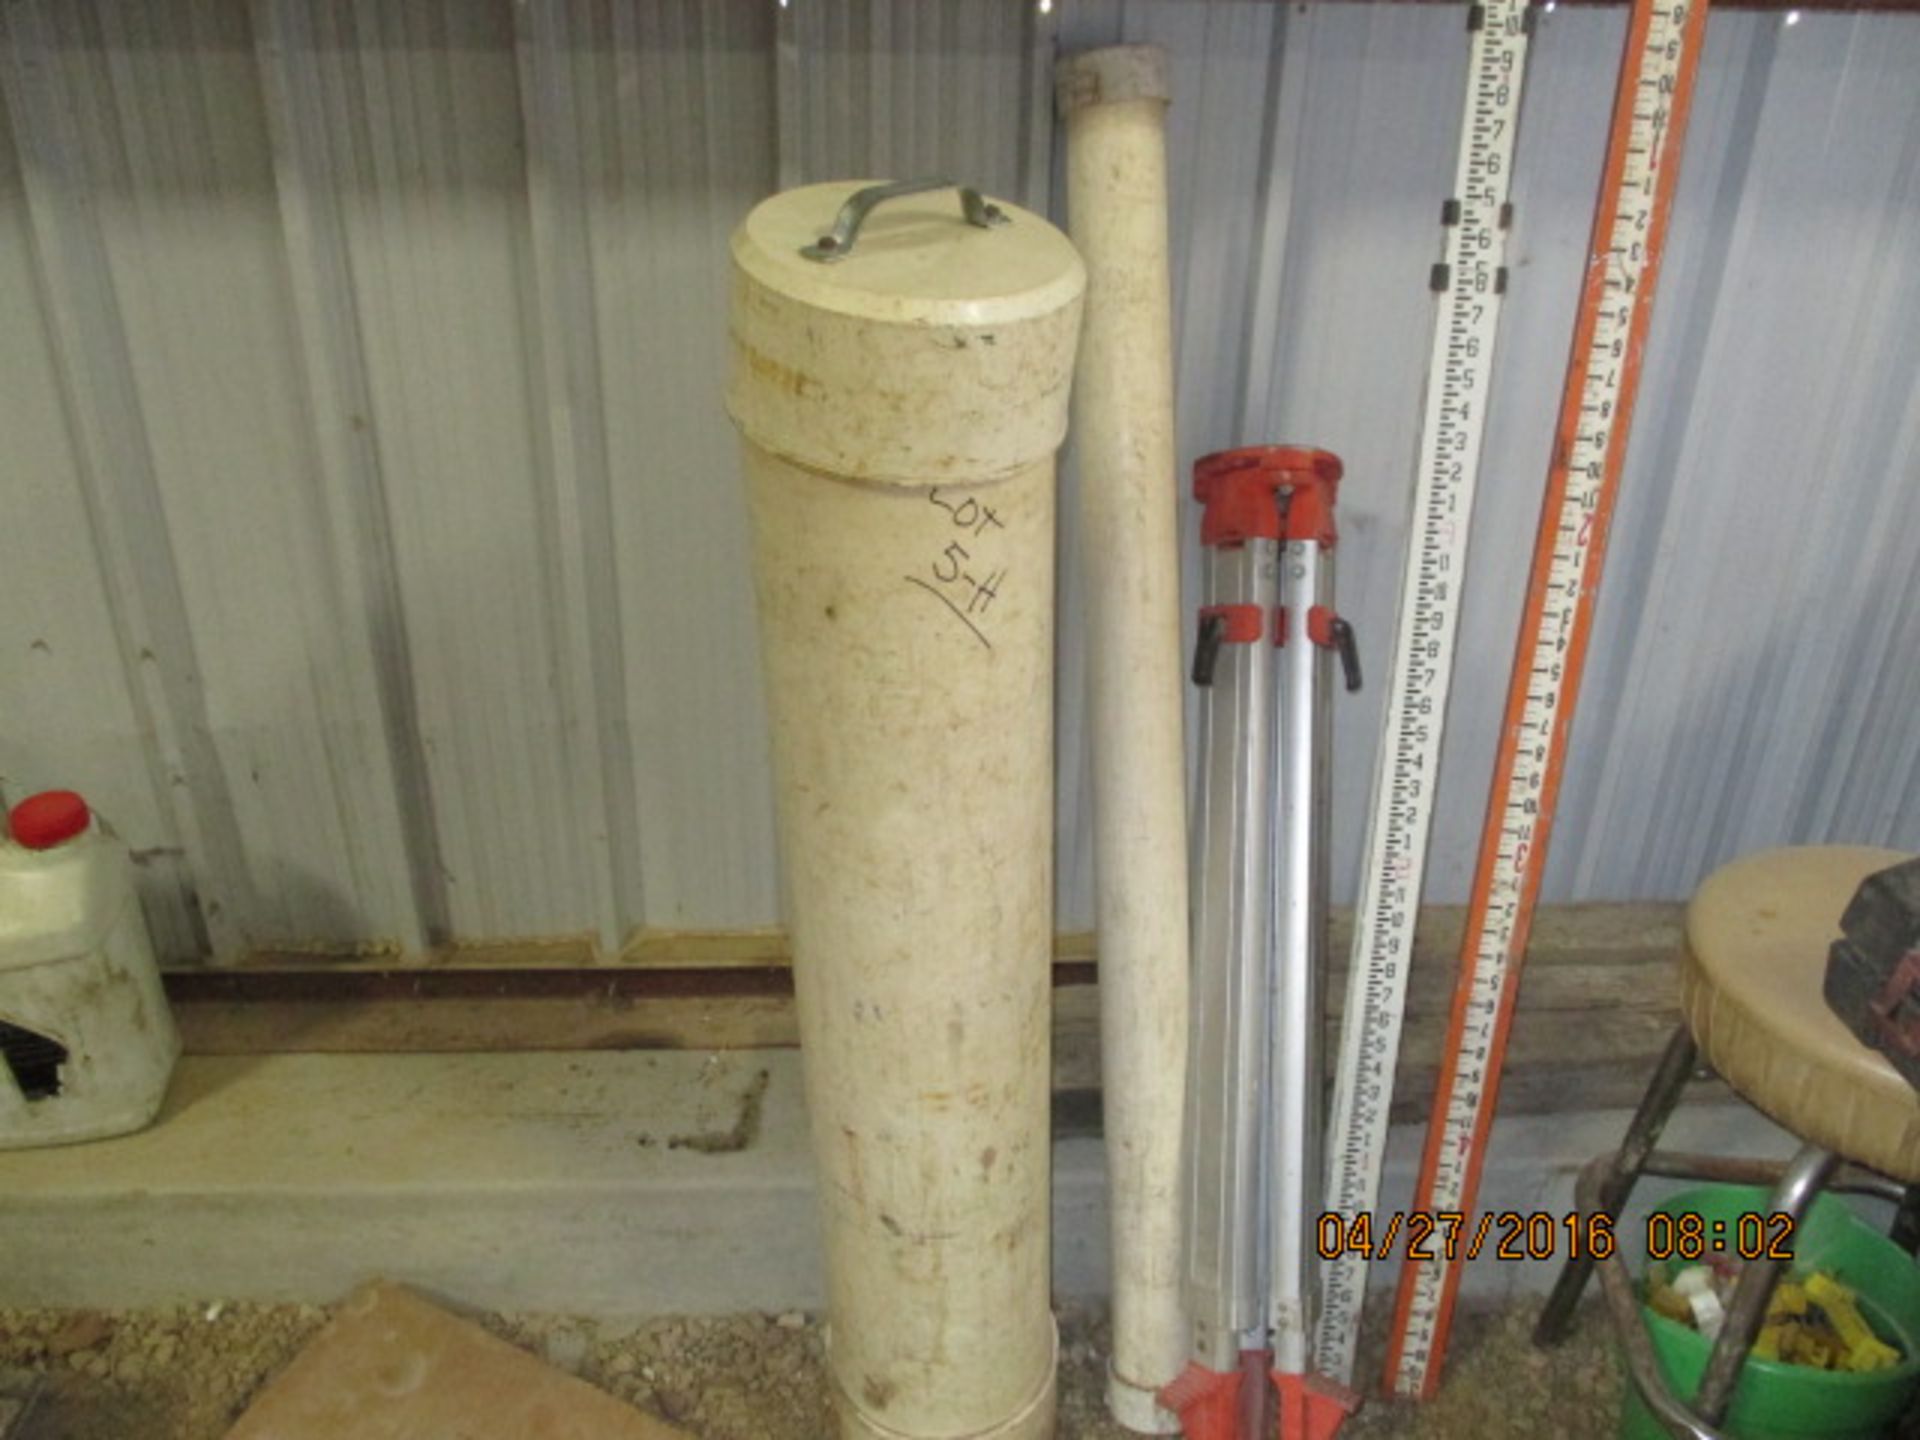 Tripod, (2) grade sticks, (2) PVC containers